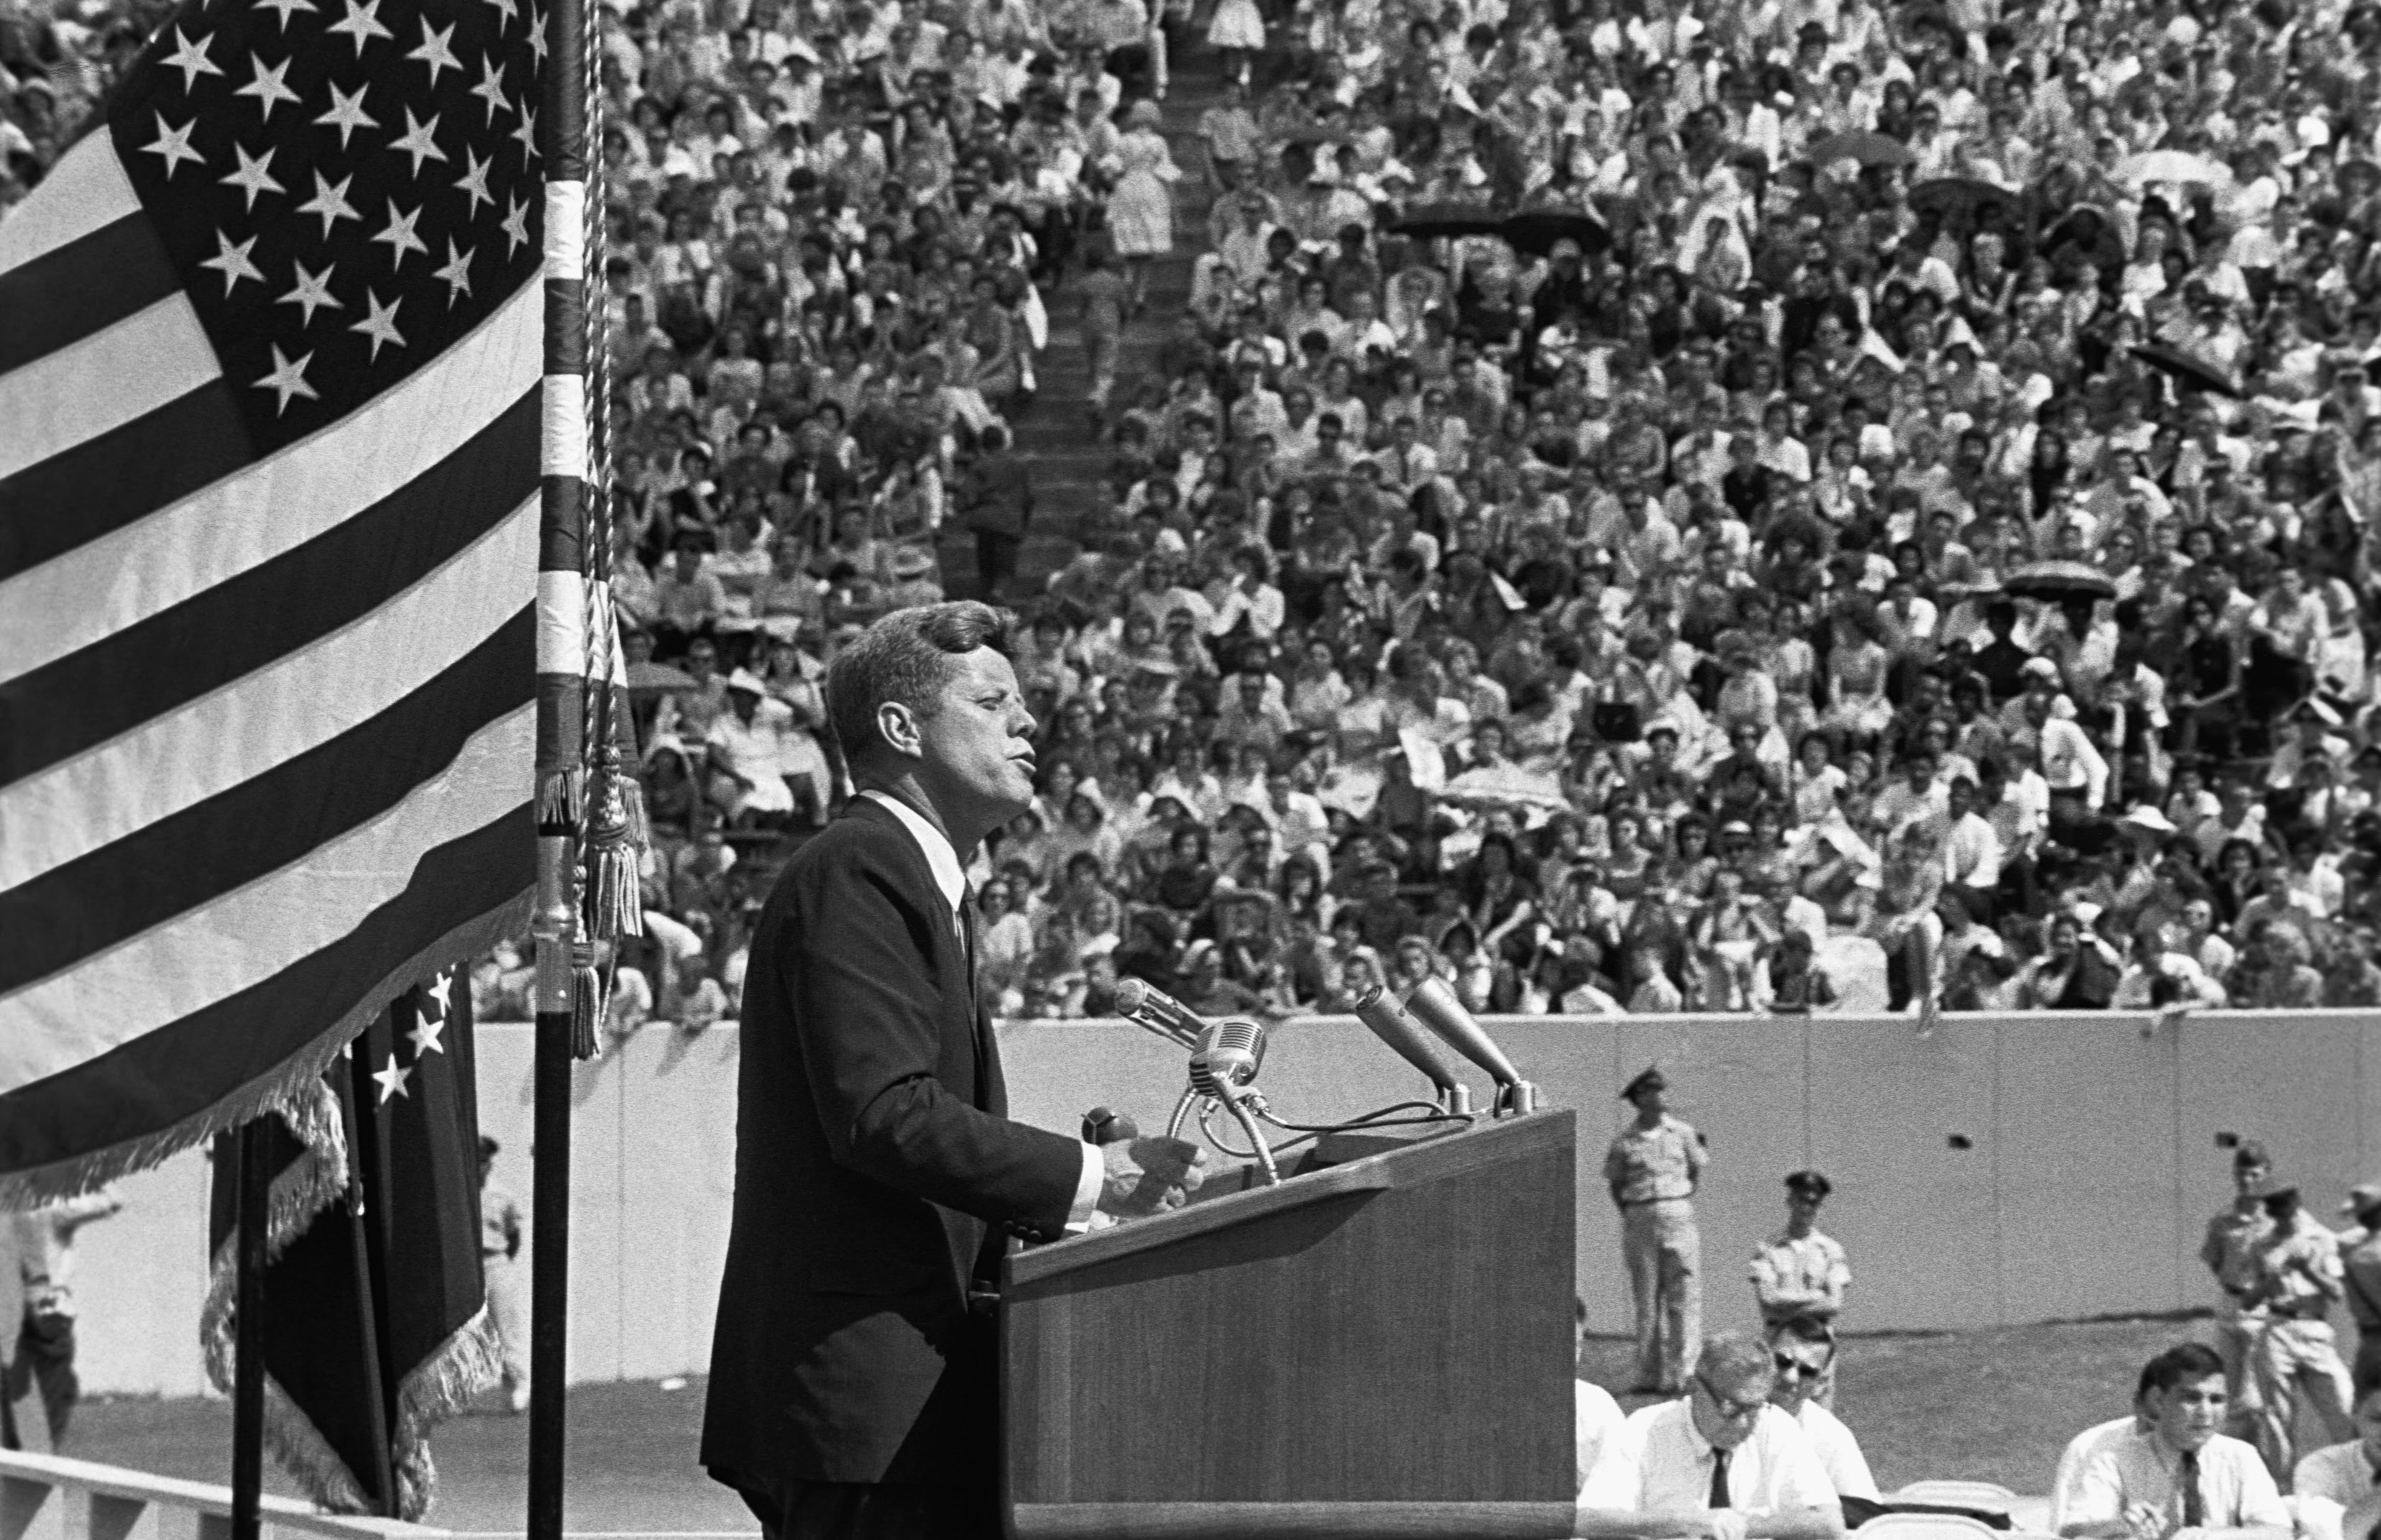 Kennedy historic speech in Houston | history.com